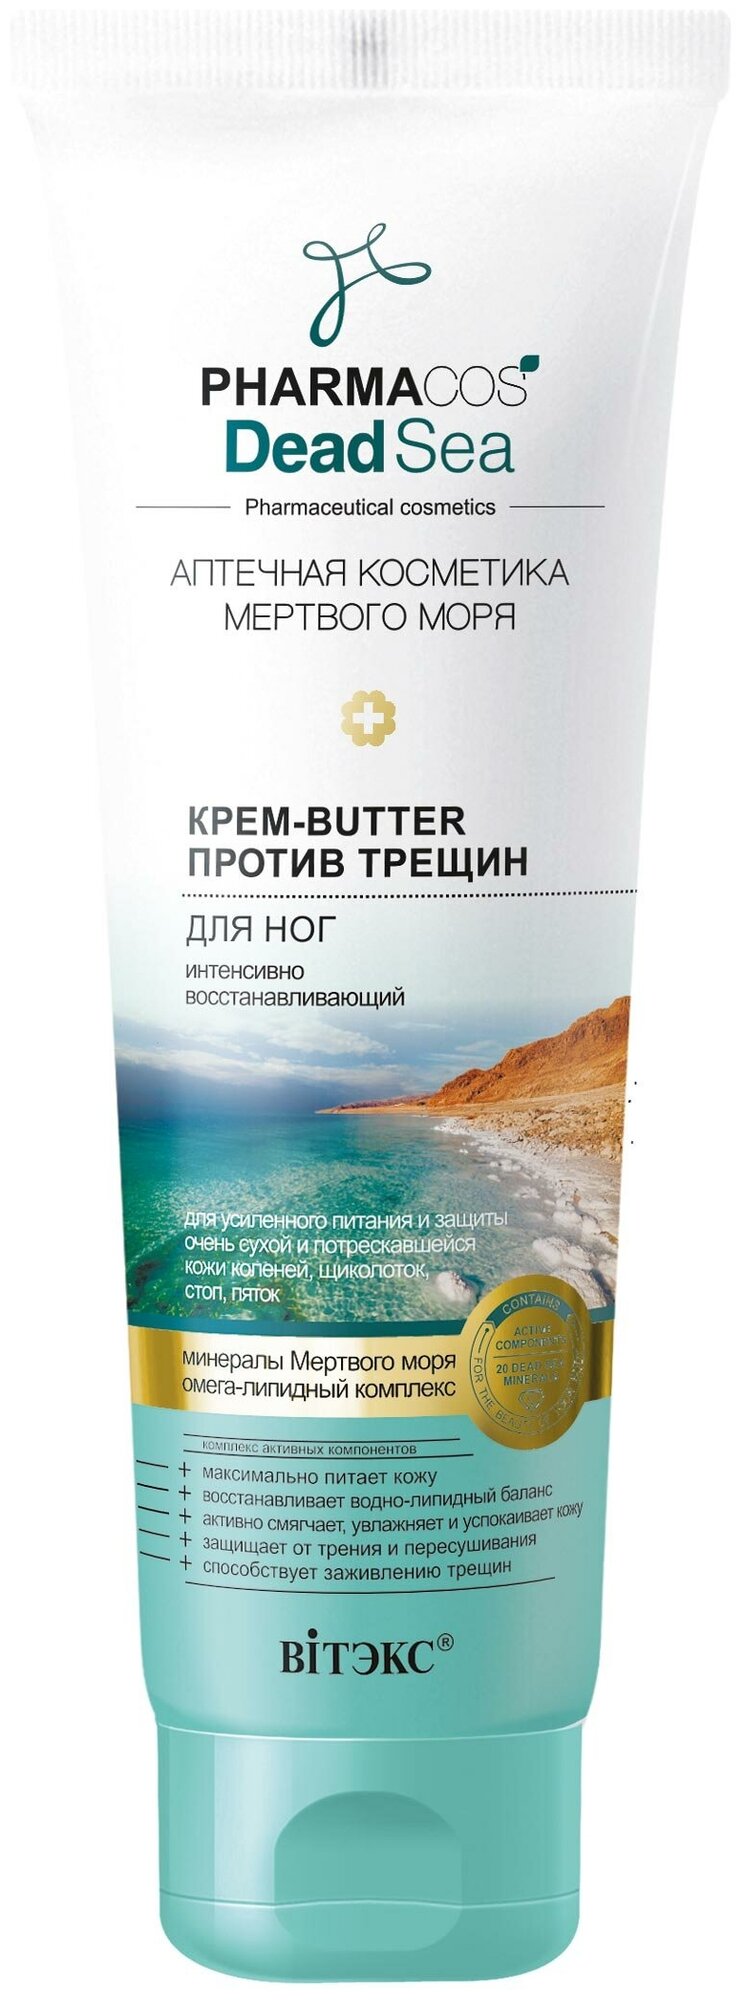 Витэкс Крем-butter для ног против трещин Pharmacos dead sea